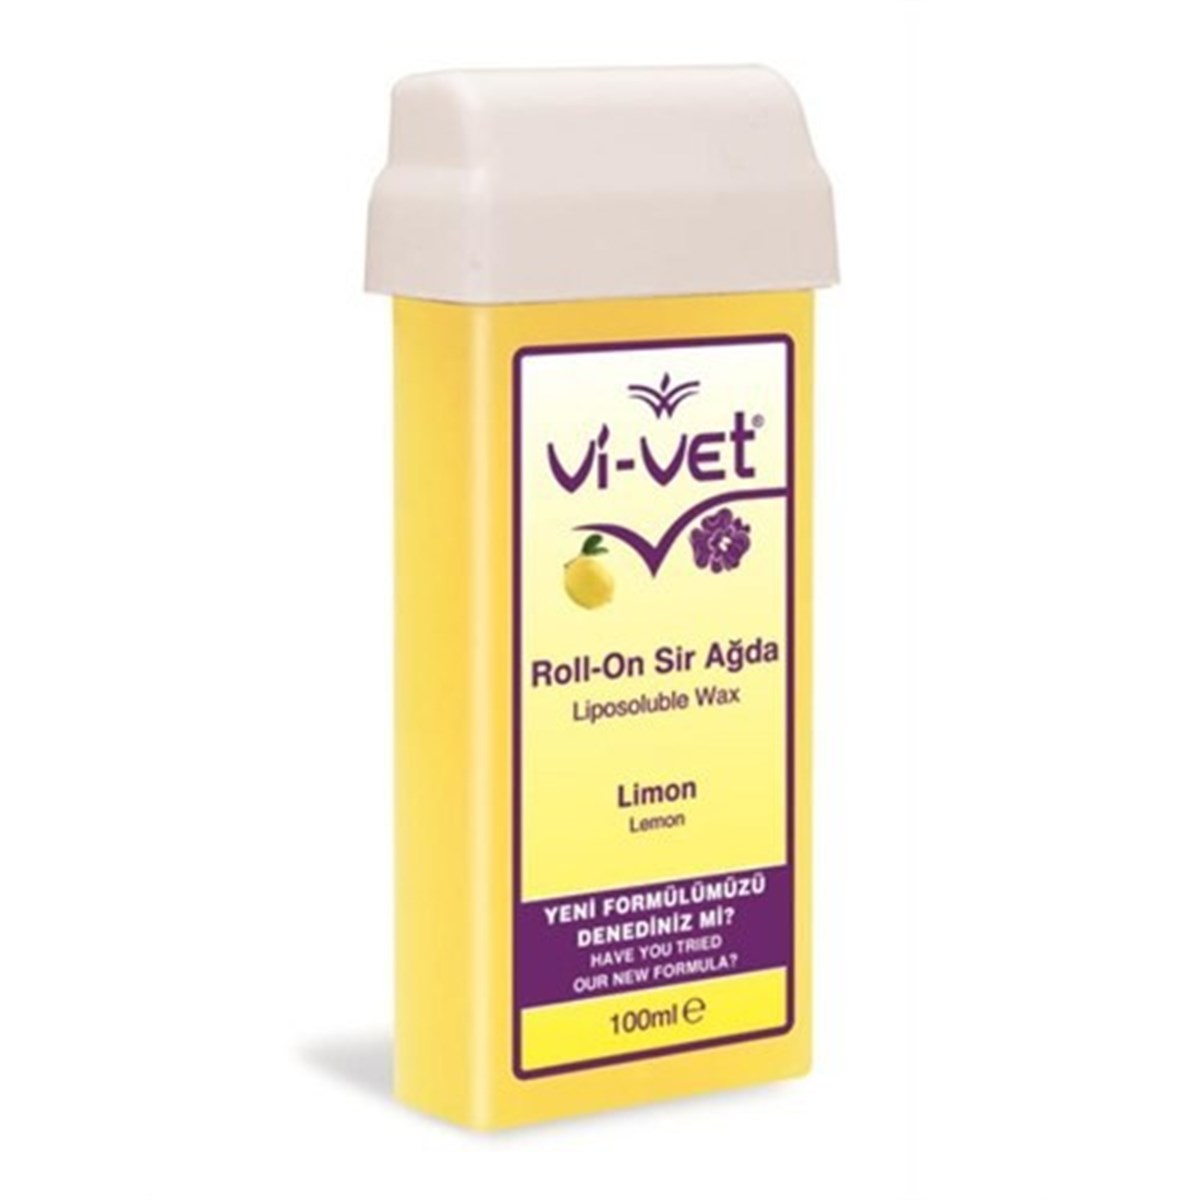 Vi-Vet Kartuş Roll-On Ağda Limon 100 Ml | Cossta Cosmetic Station